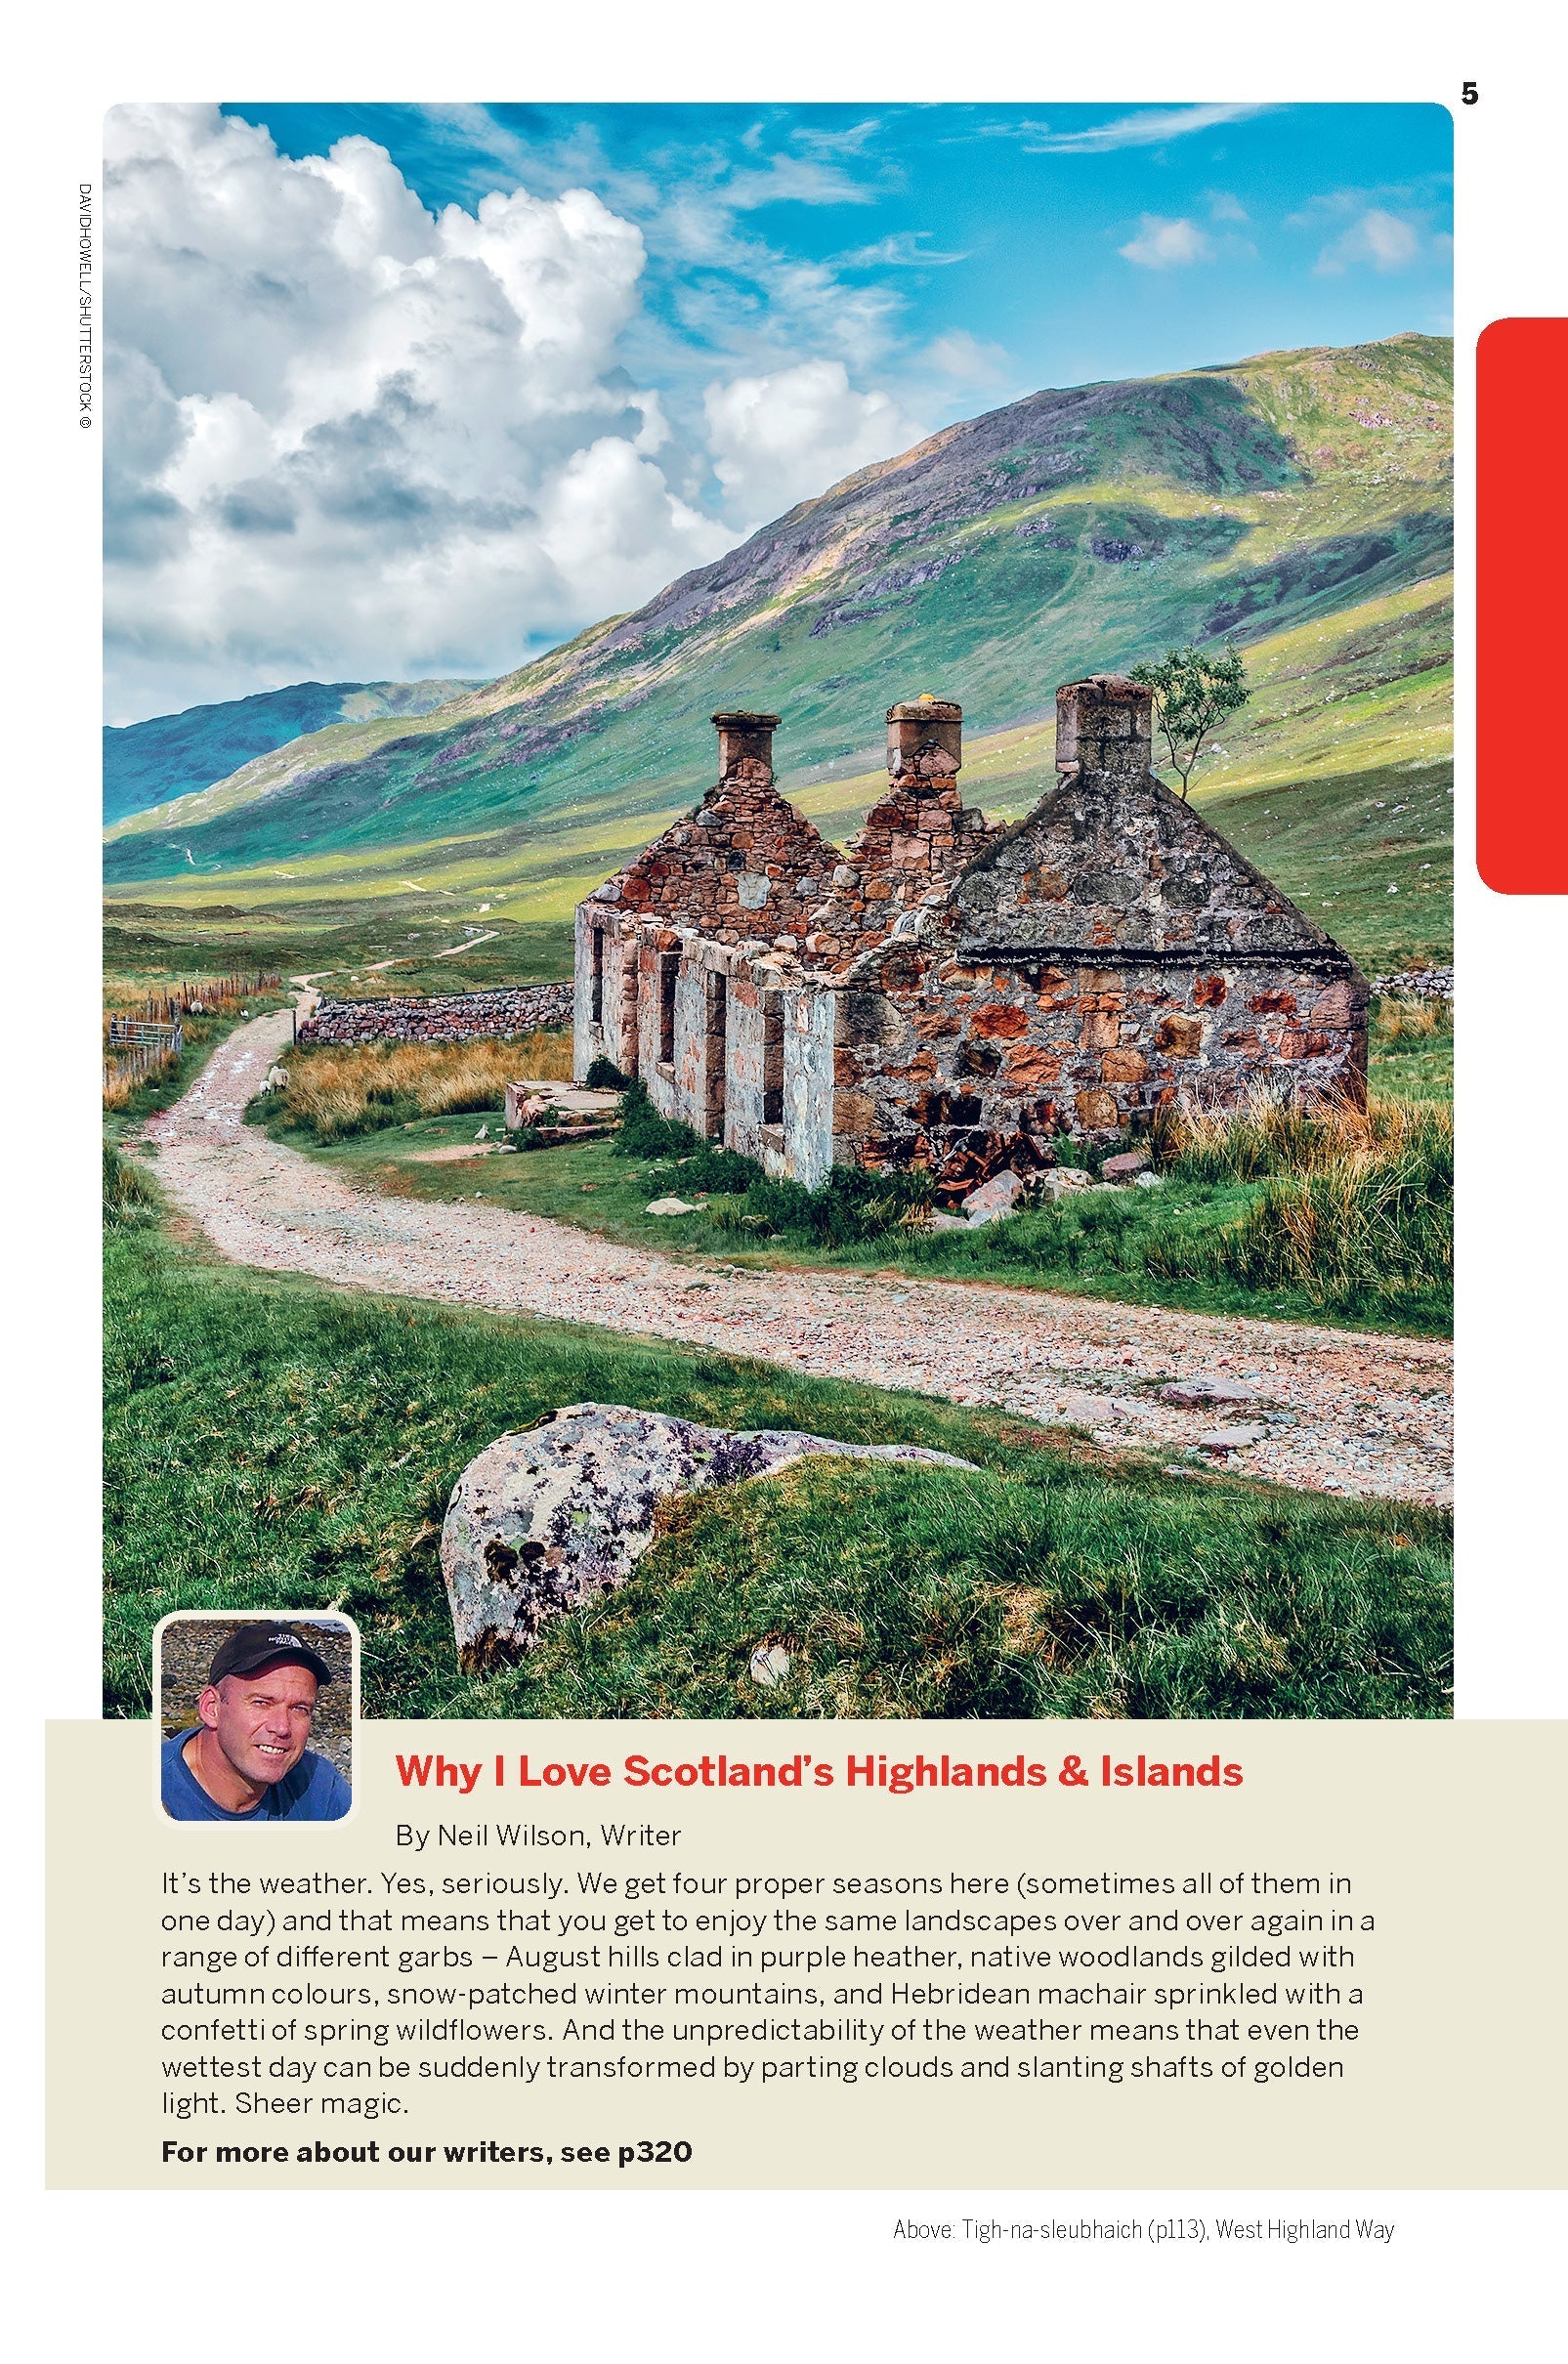 Scotland's Highlands & Islands - Book + eBook